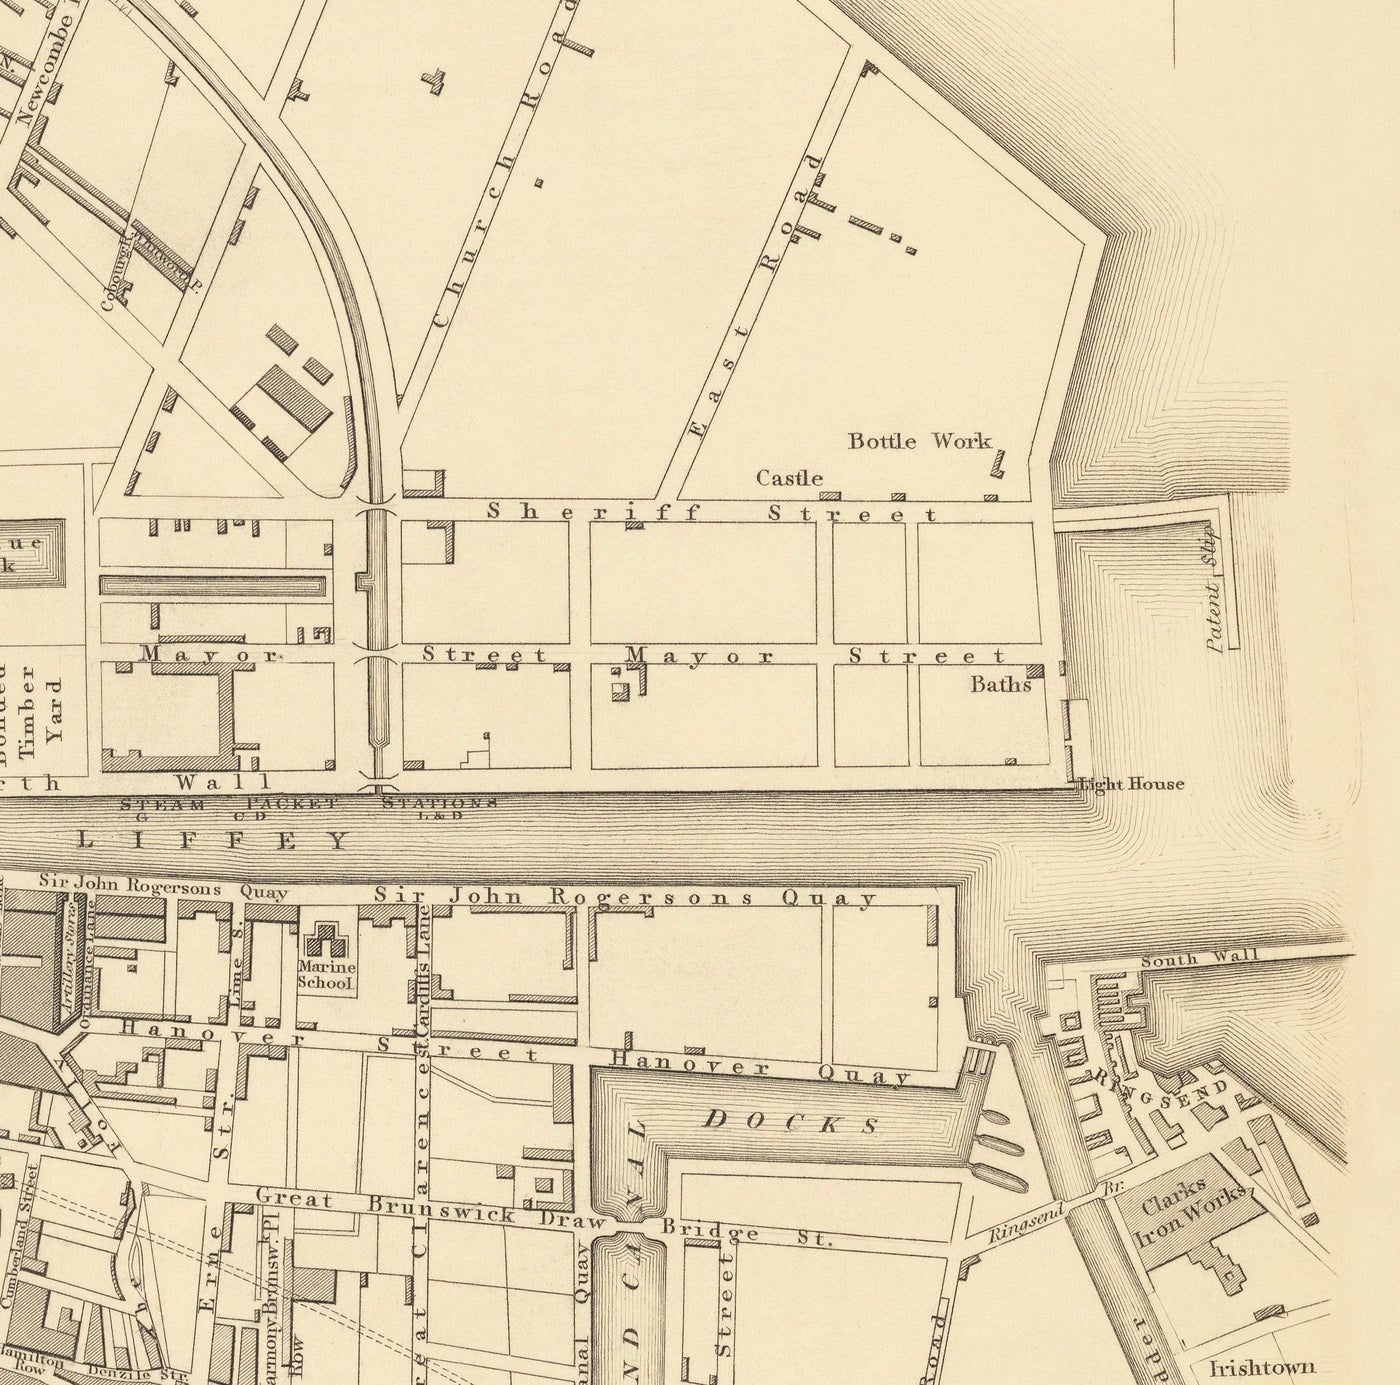 Old Map of Dublin, Ireland, 1836 by WB Clark for SDUK - River Liffey, Leinster, Co. Dublin